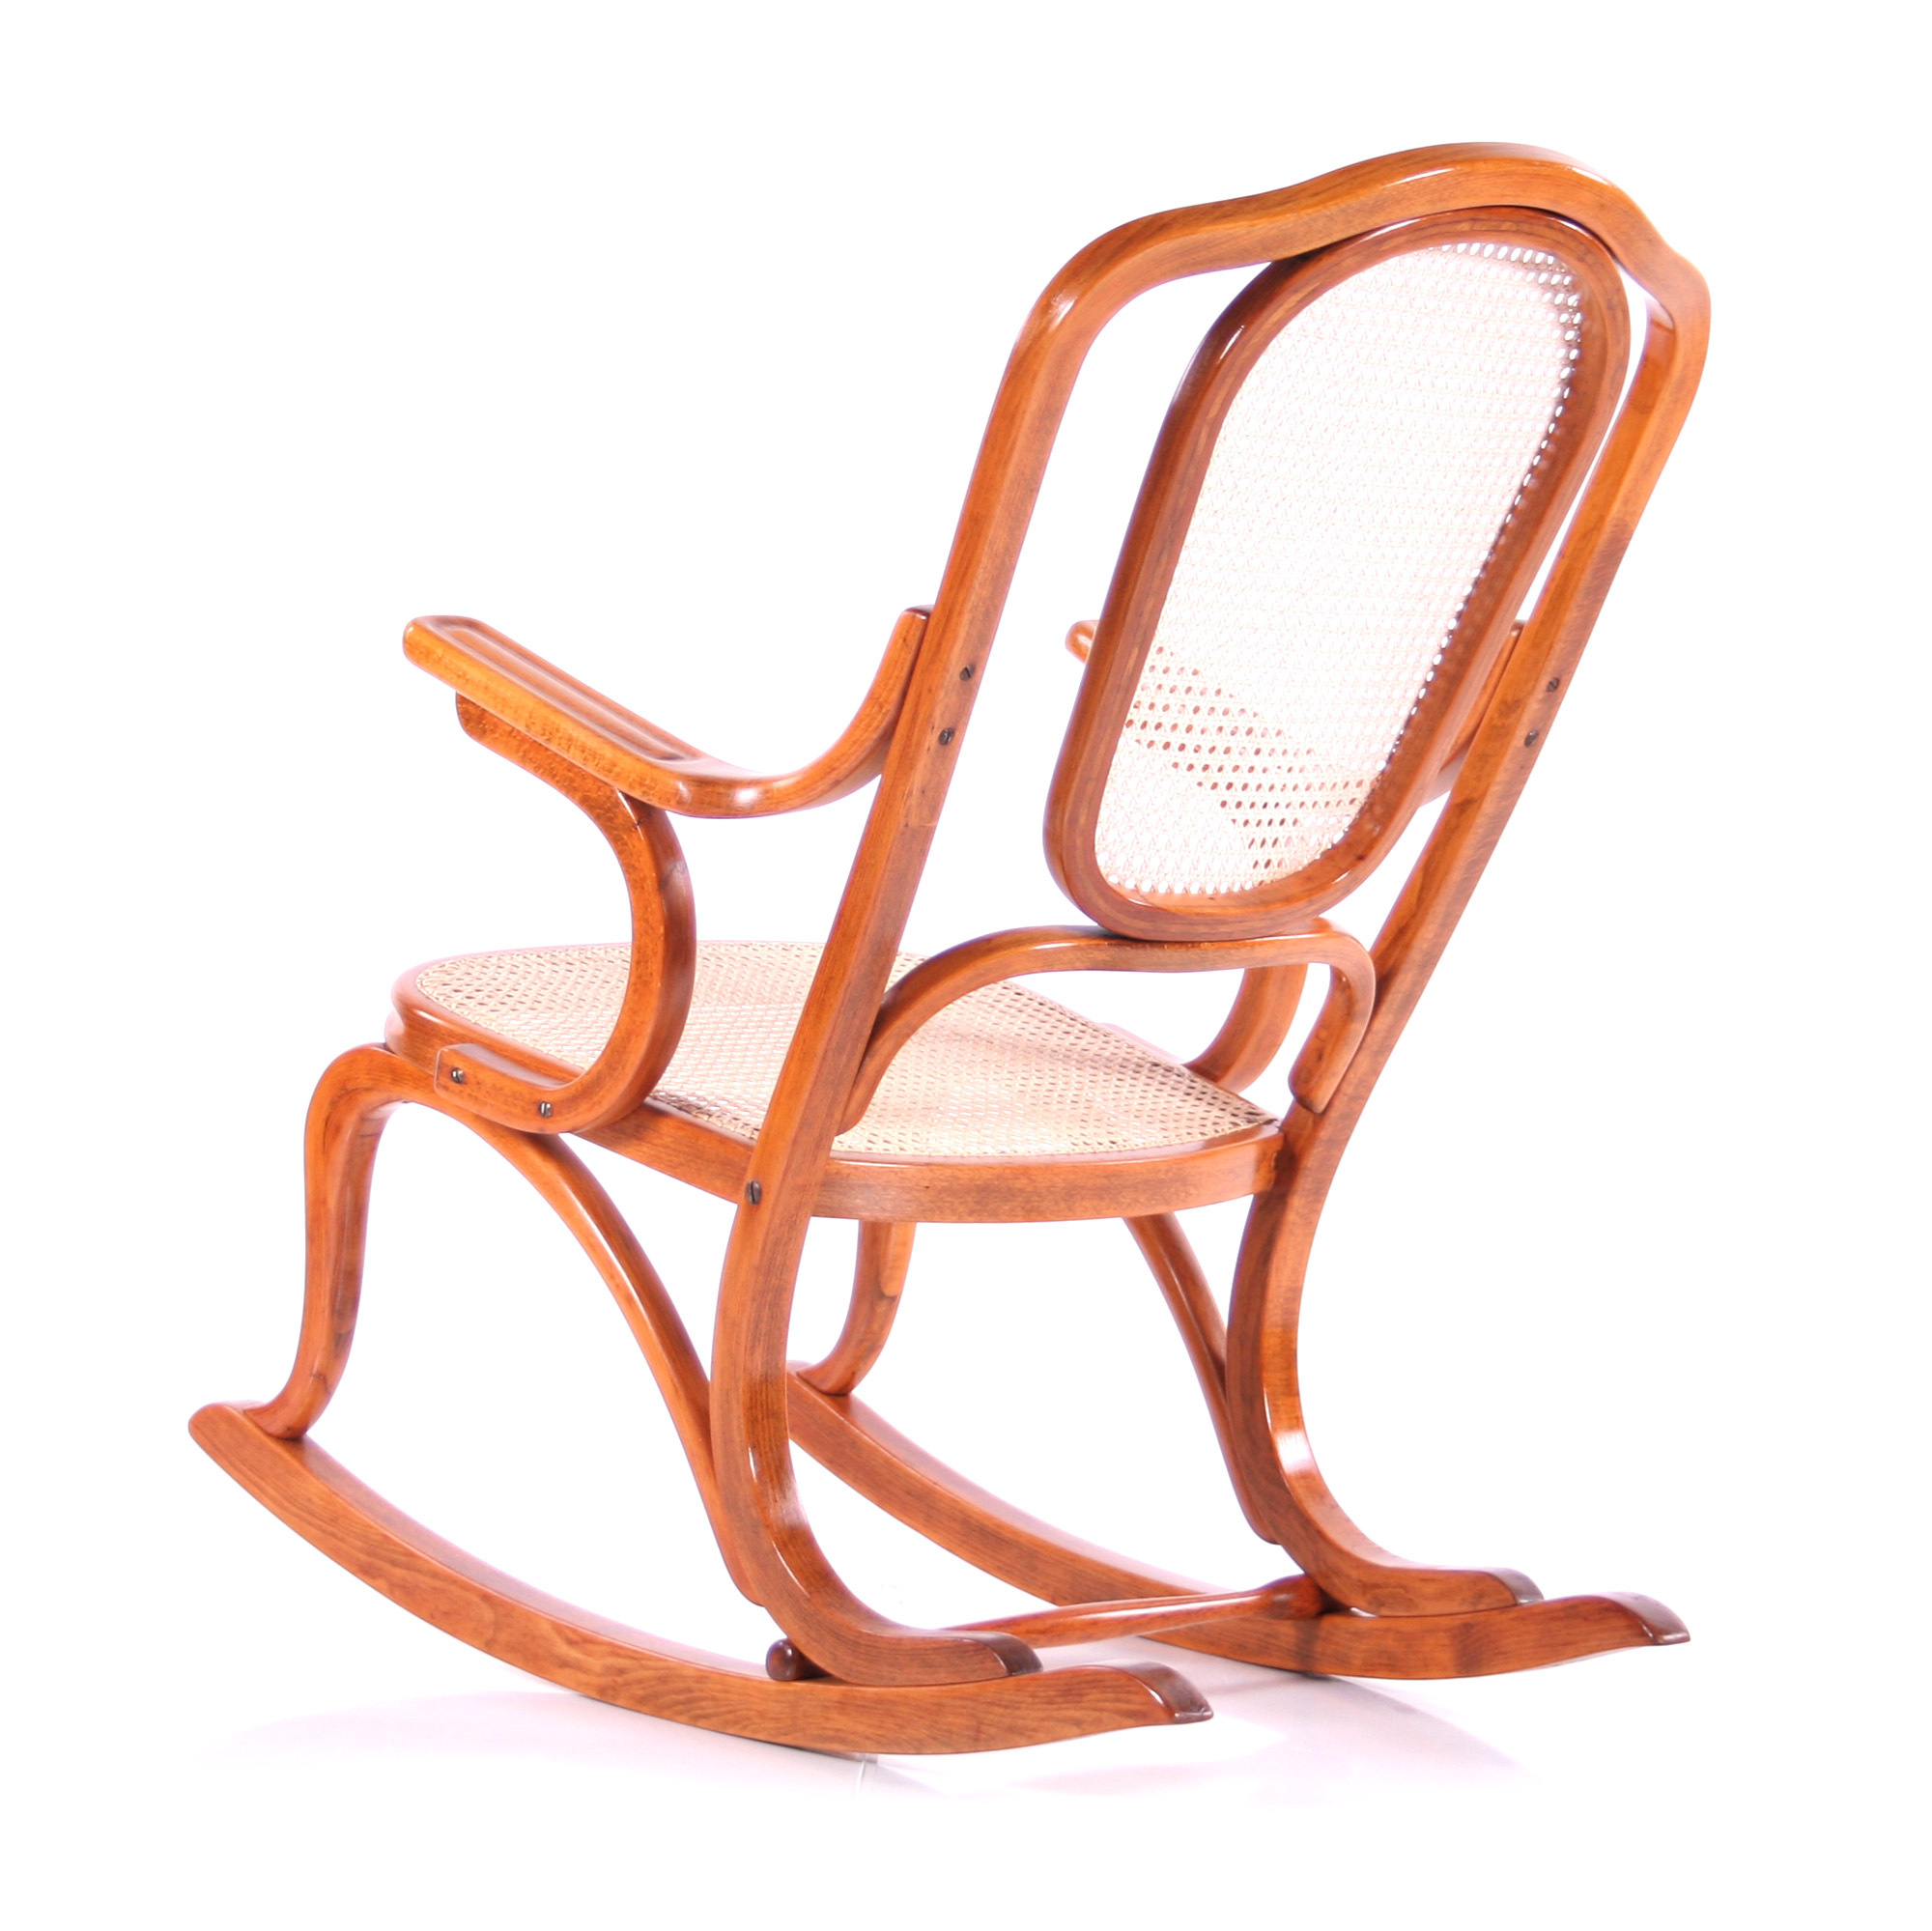 Rattan wickerwork rocking chair